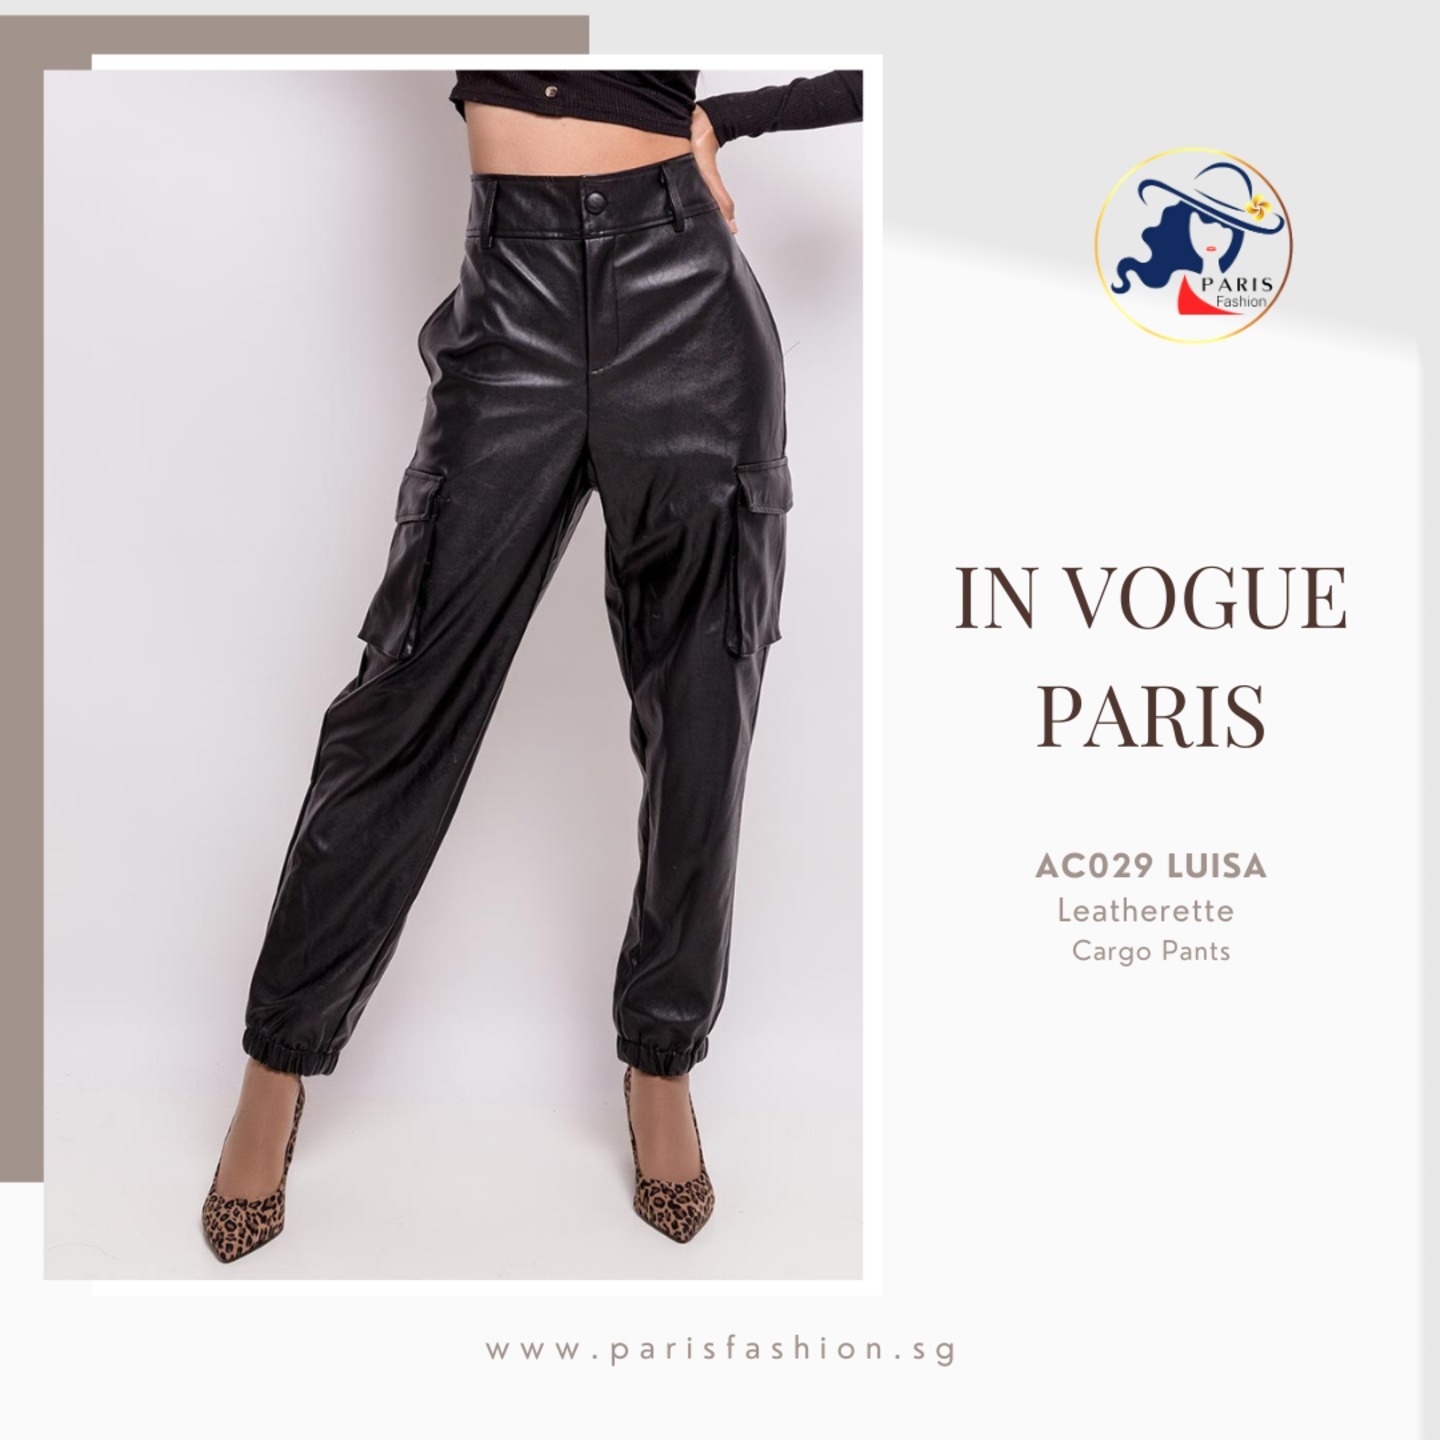 IN VOGUE PARIS AC029 LUISA Leatherette  Cargo Pants